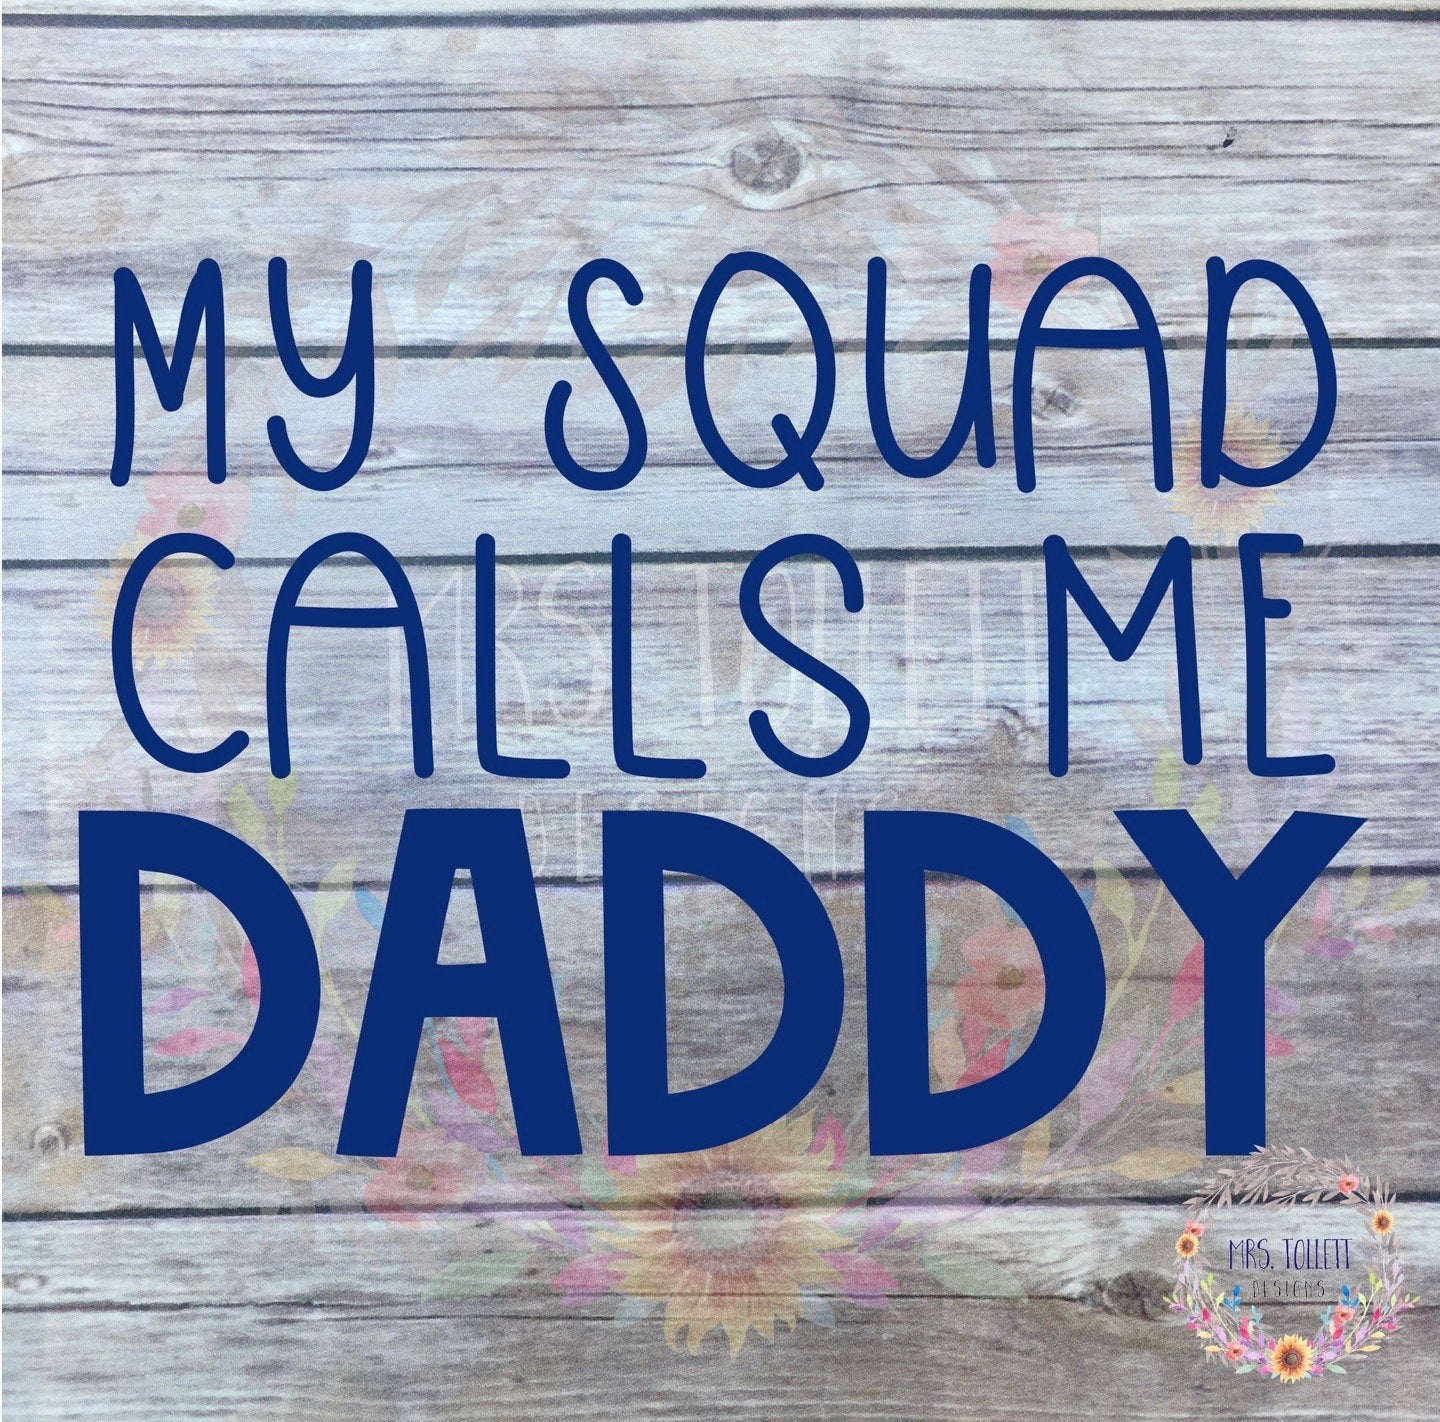 My Squad calls me Daddy, Car Decal, Dad Life, Bumper Sticker, Dad Gift, Squad Goals